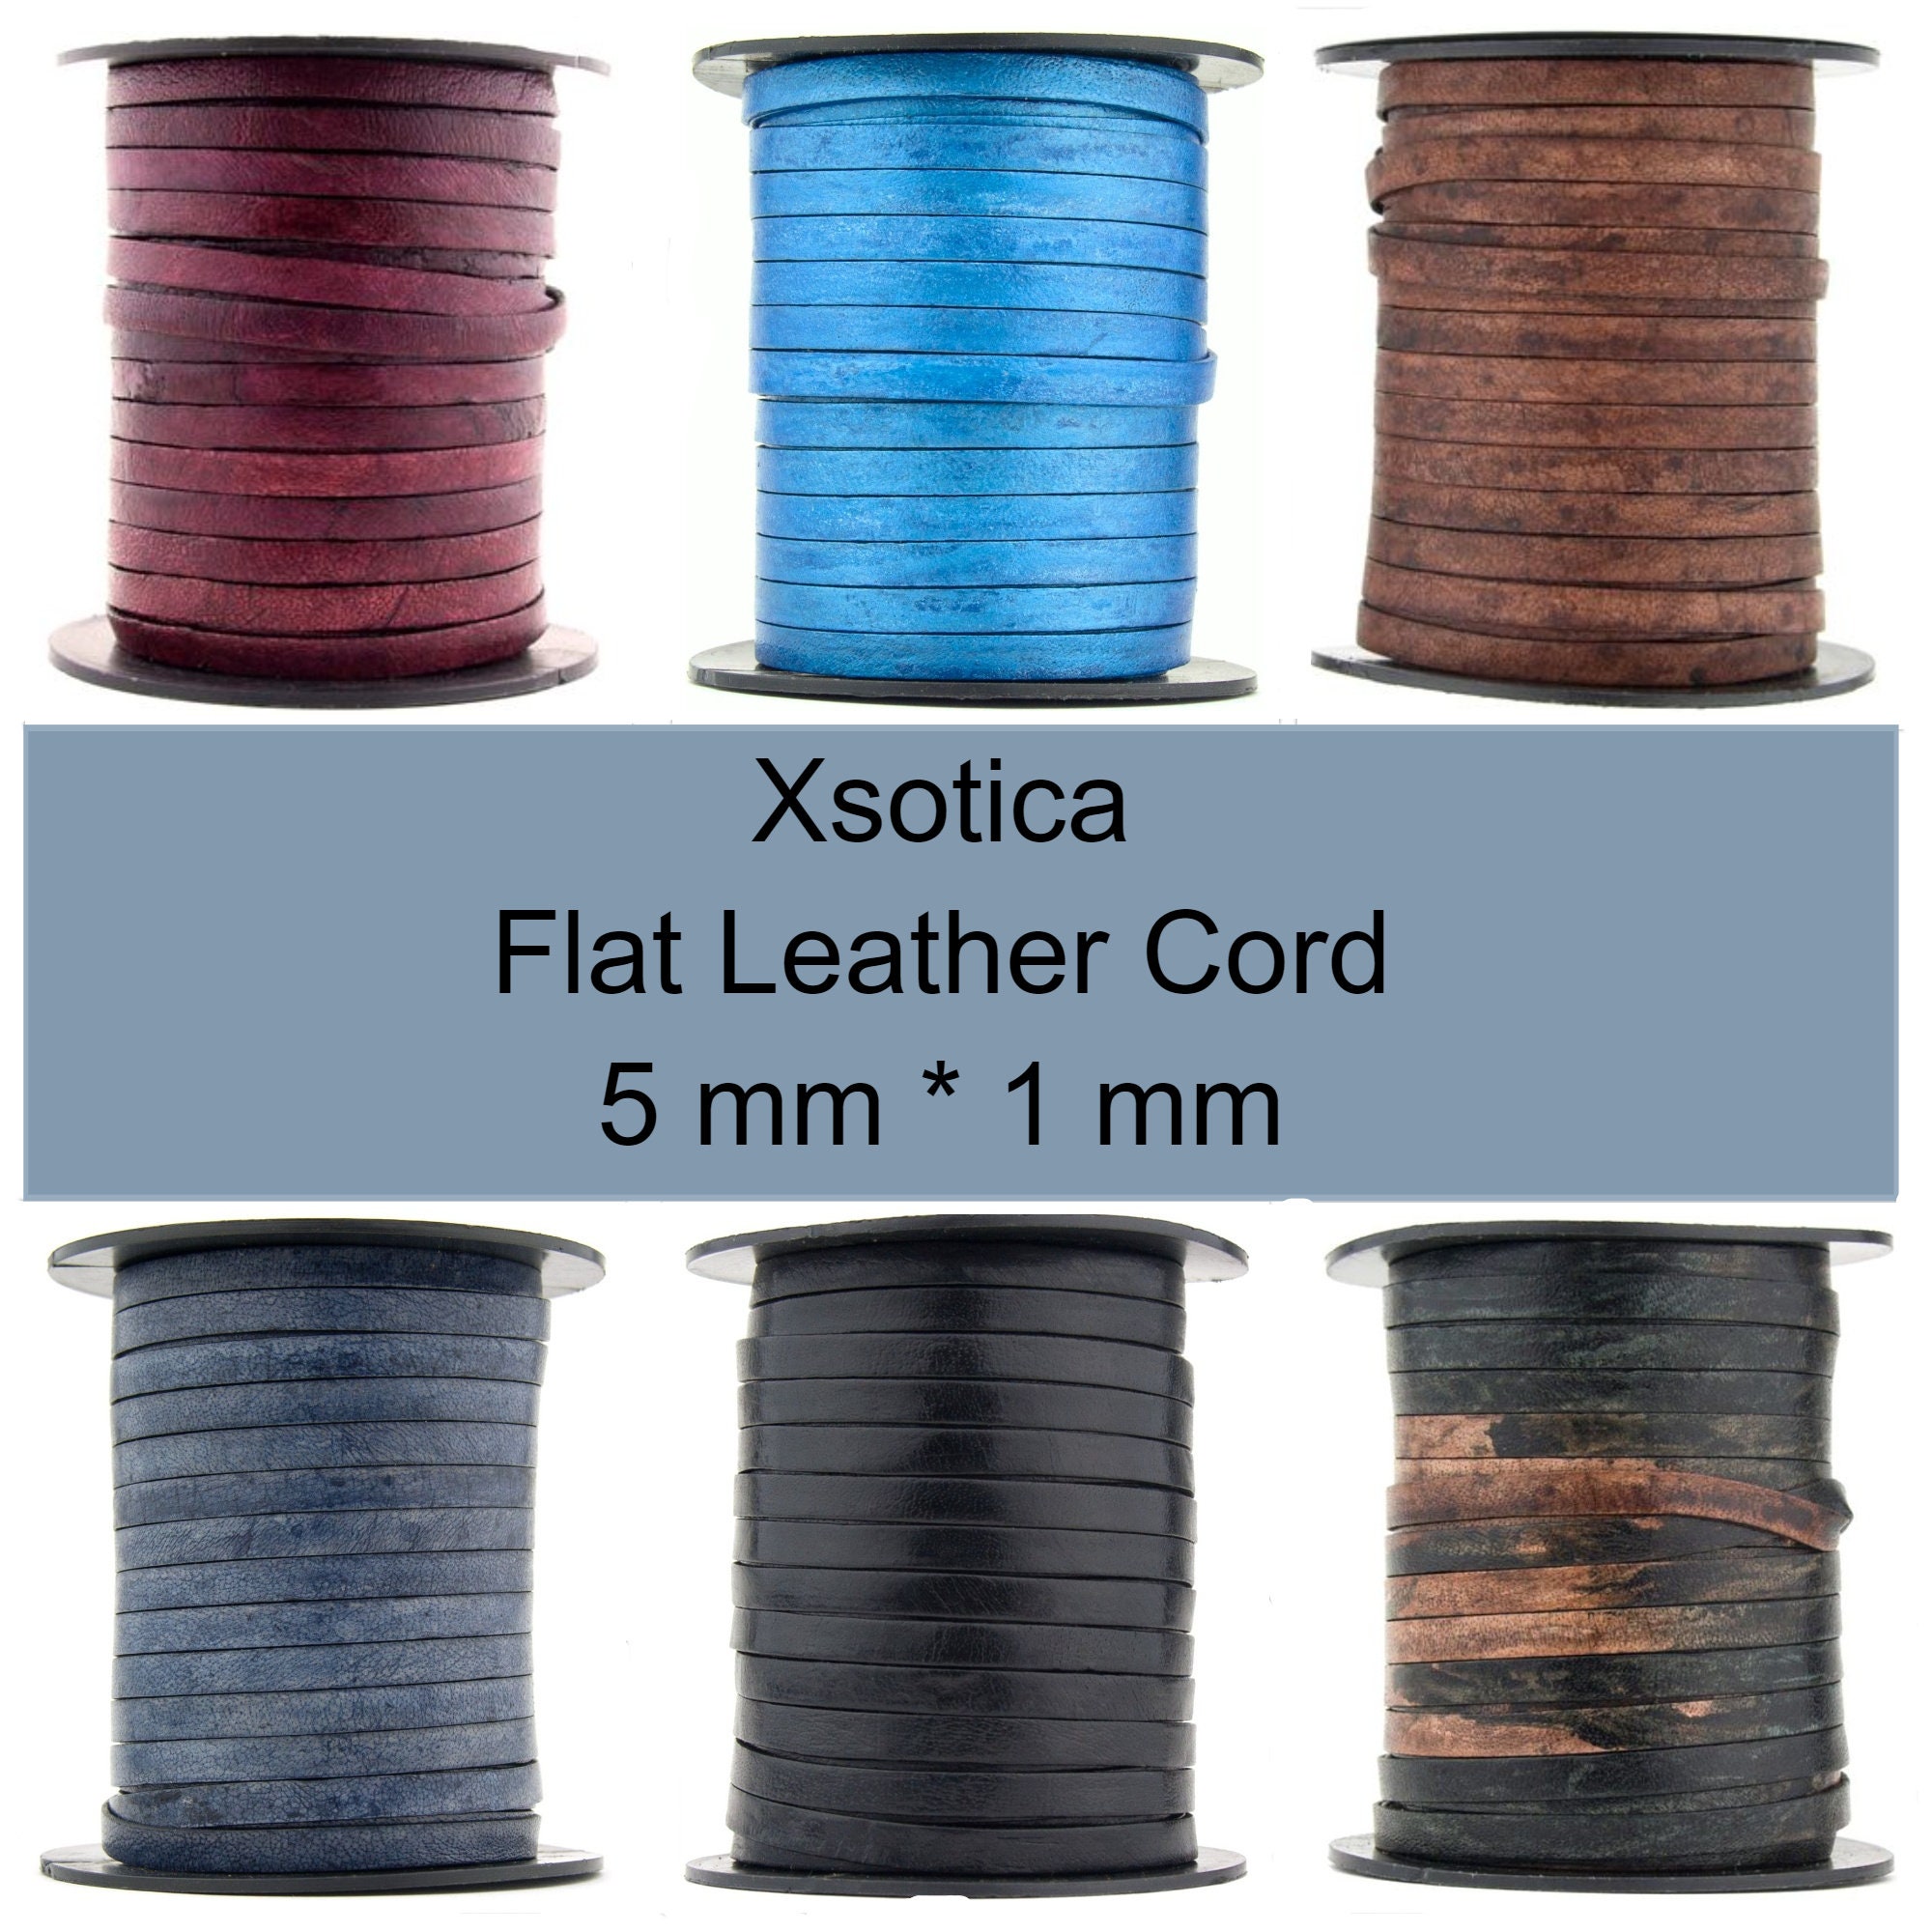 Xsotica Black Flat 3mm X 1mm Waxed Cotton Cord